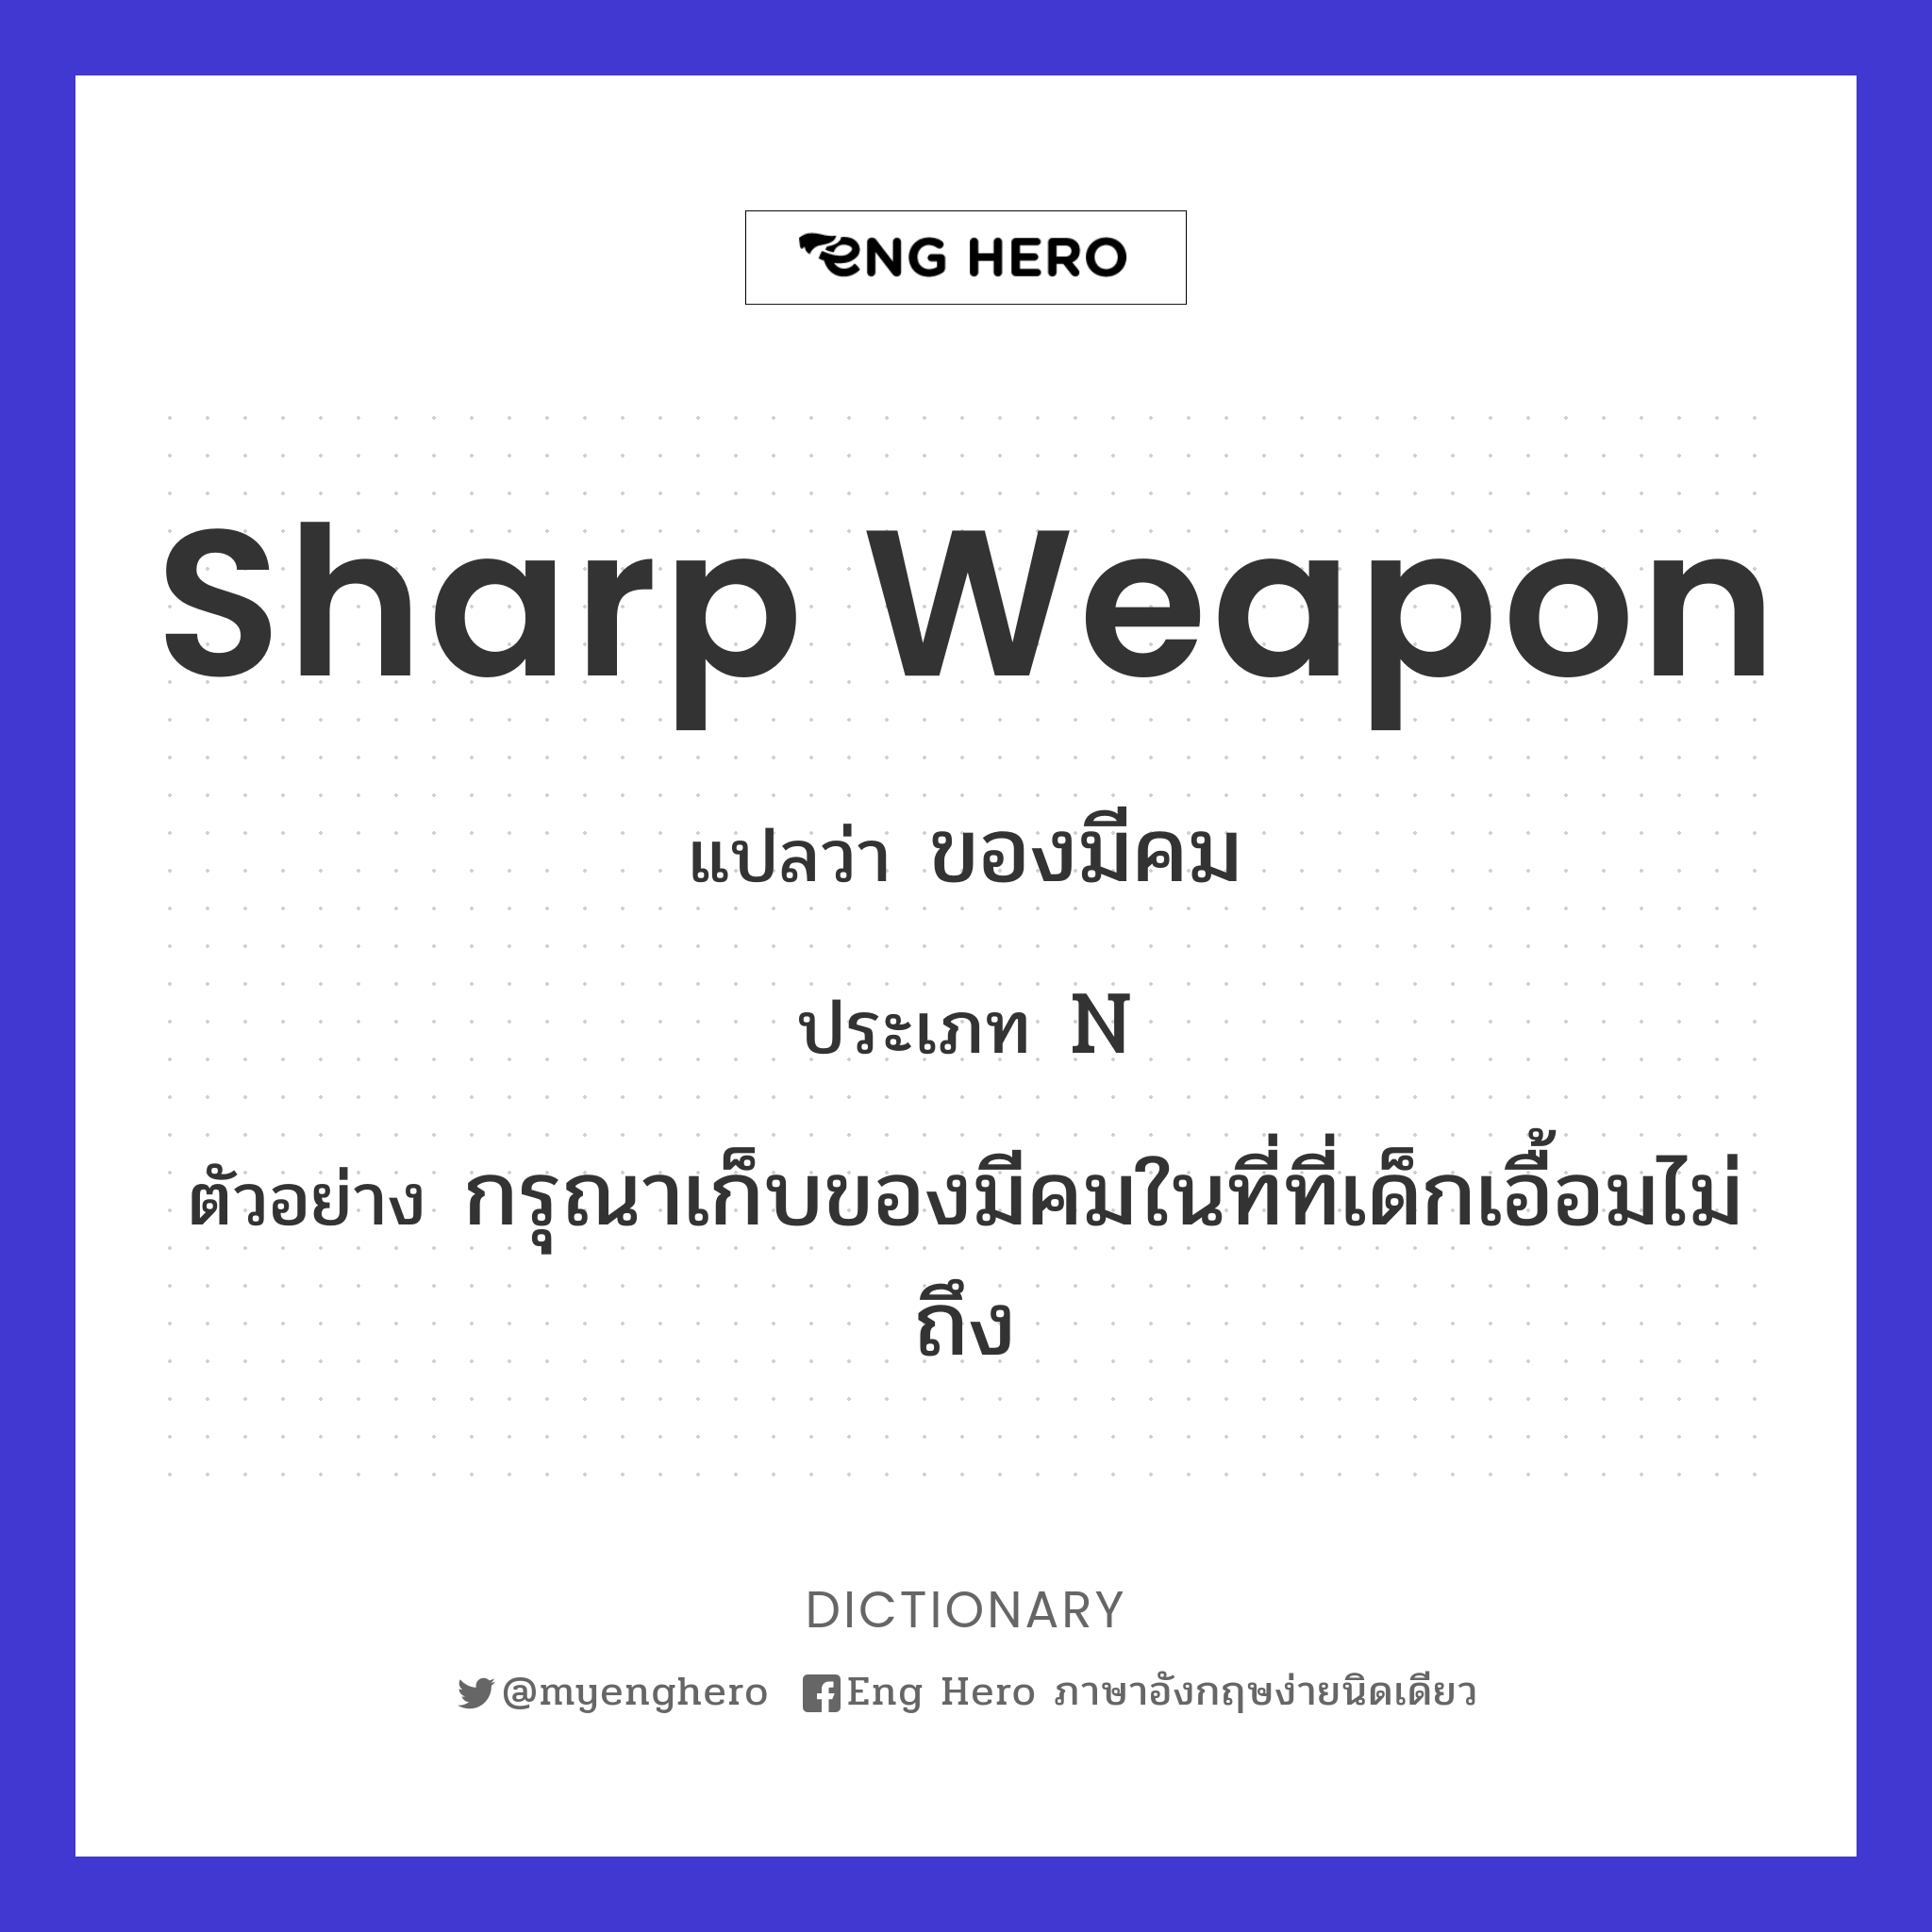 sharp weapon